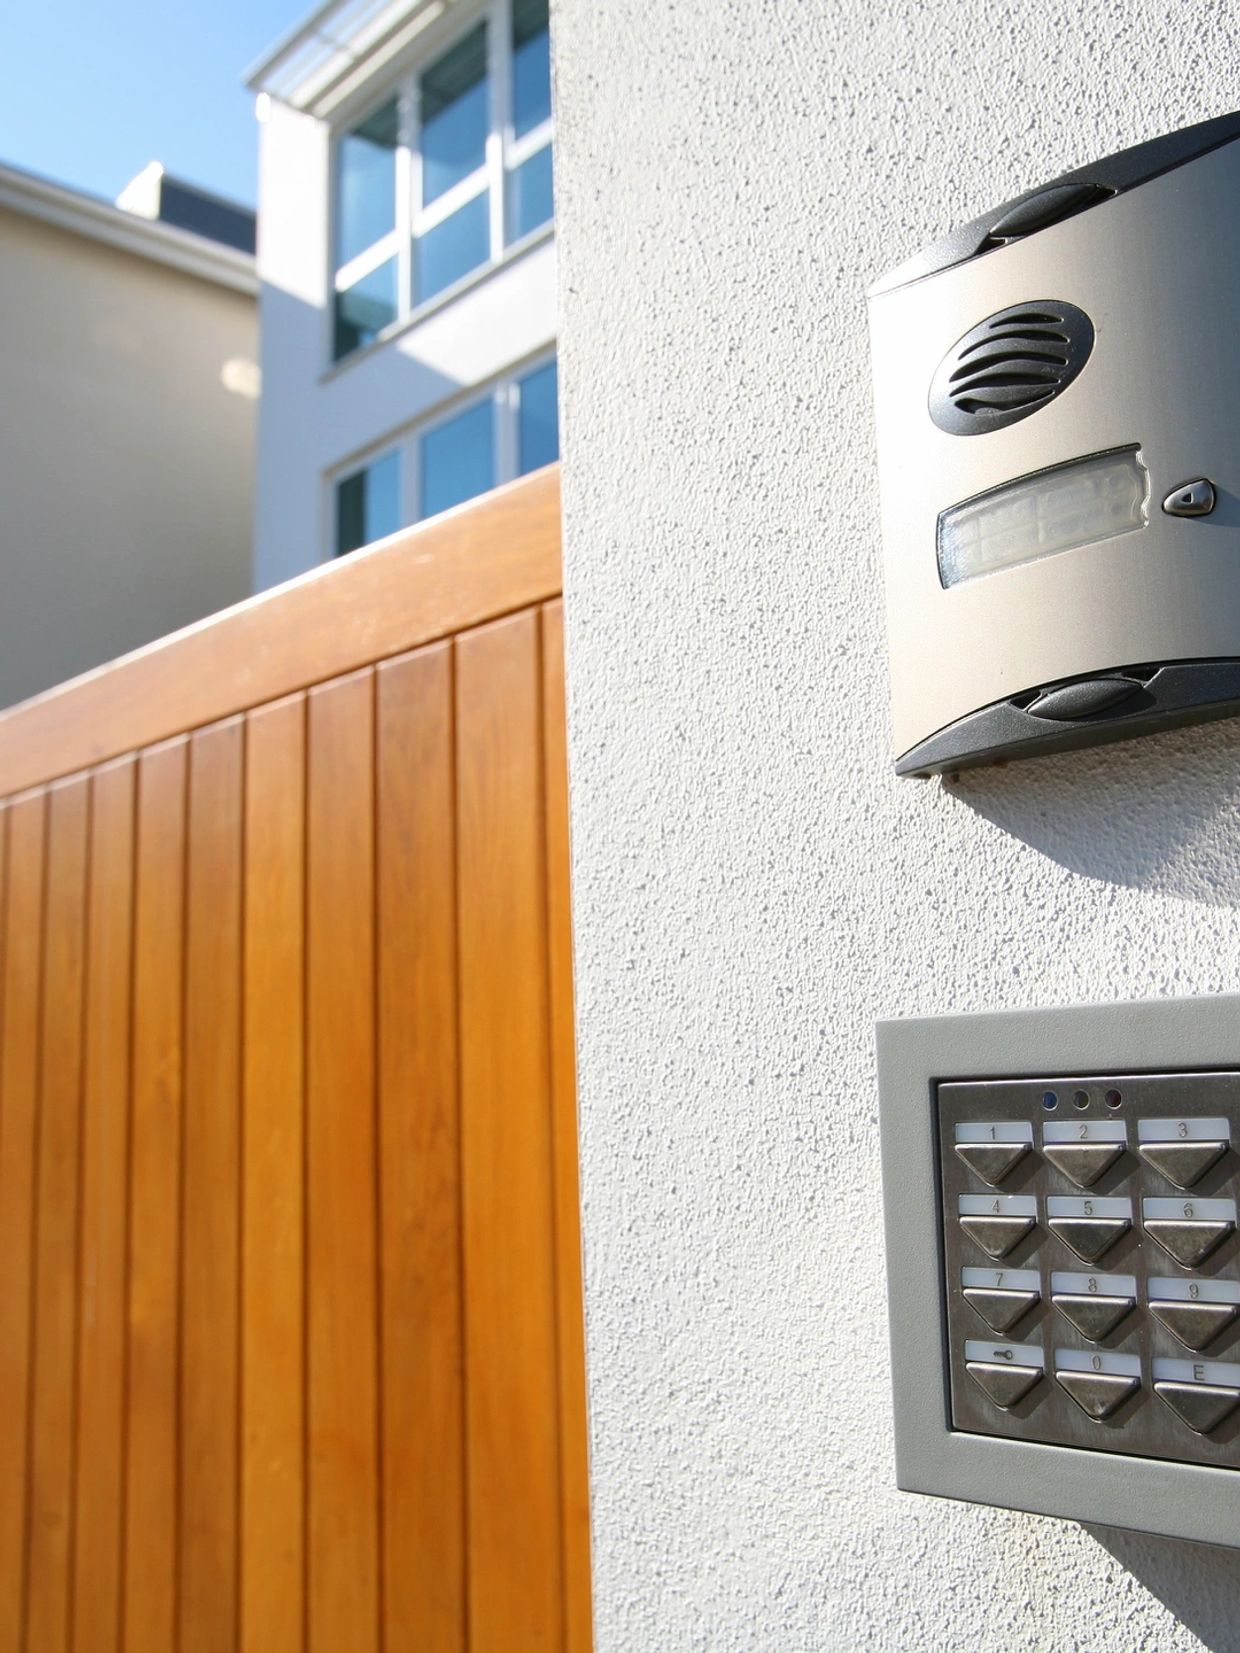 Intruder alarm installation, Fire alarm, Automated Gates, Aluminium Gates, CCTV installation. 